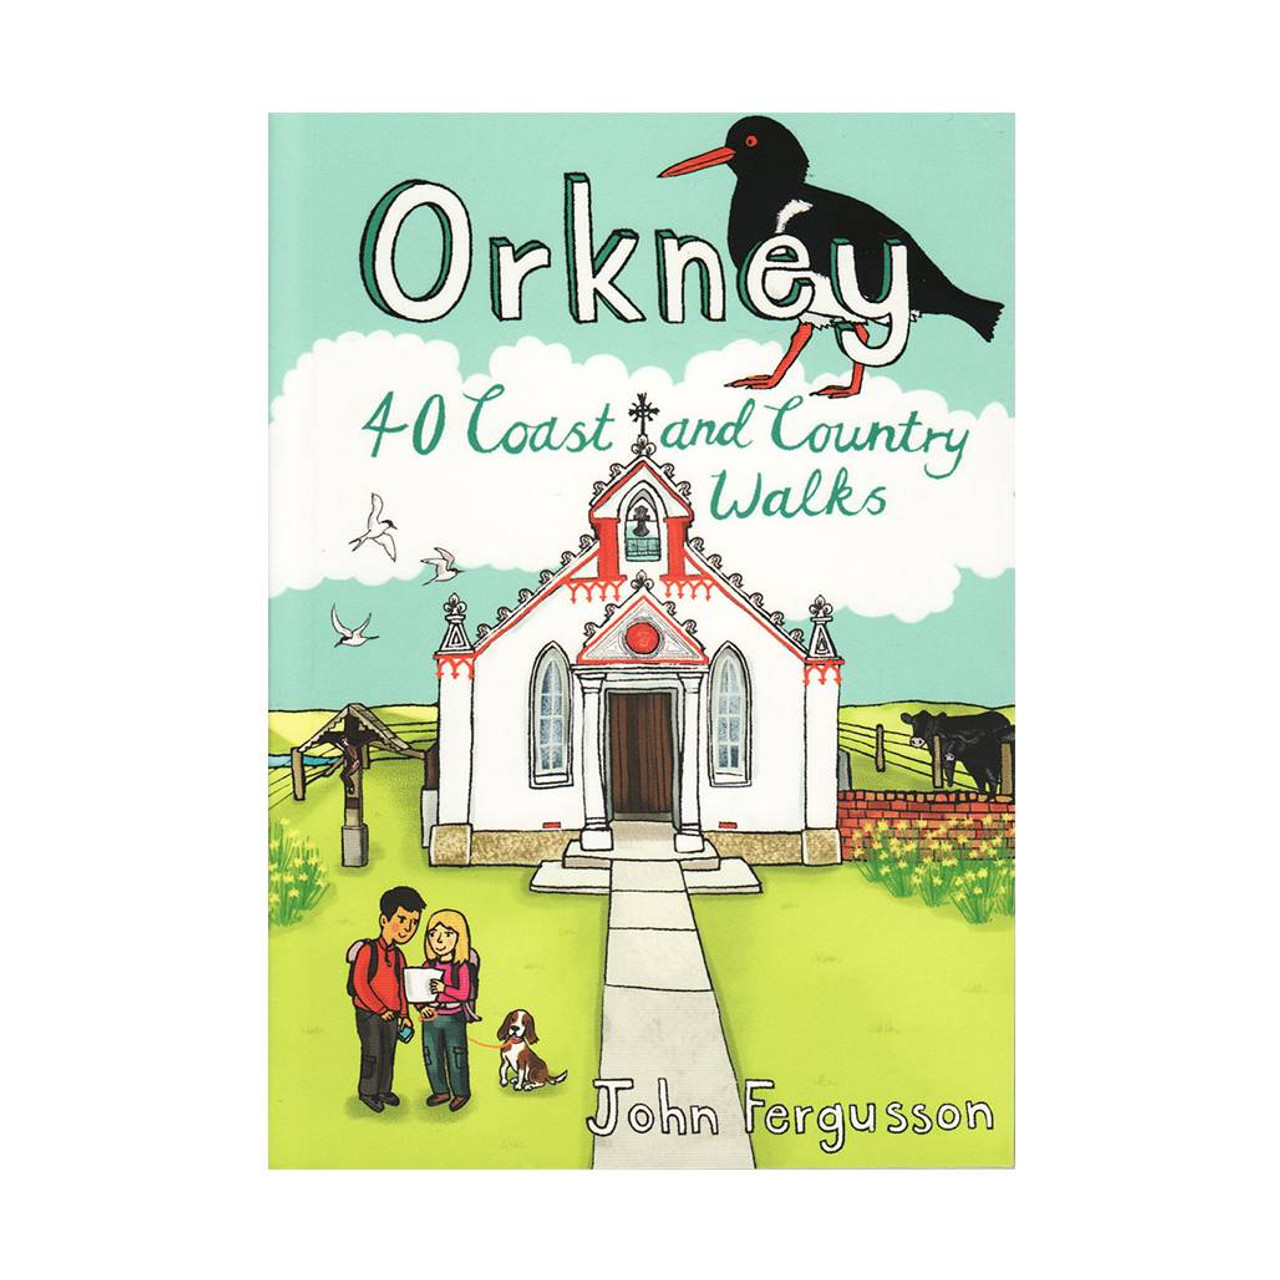 Orkney: 40 CoastandCountry Walks